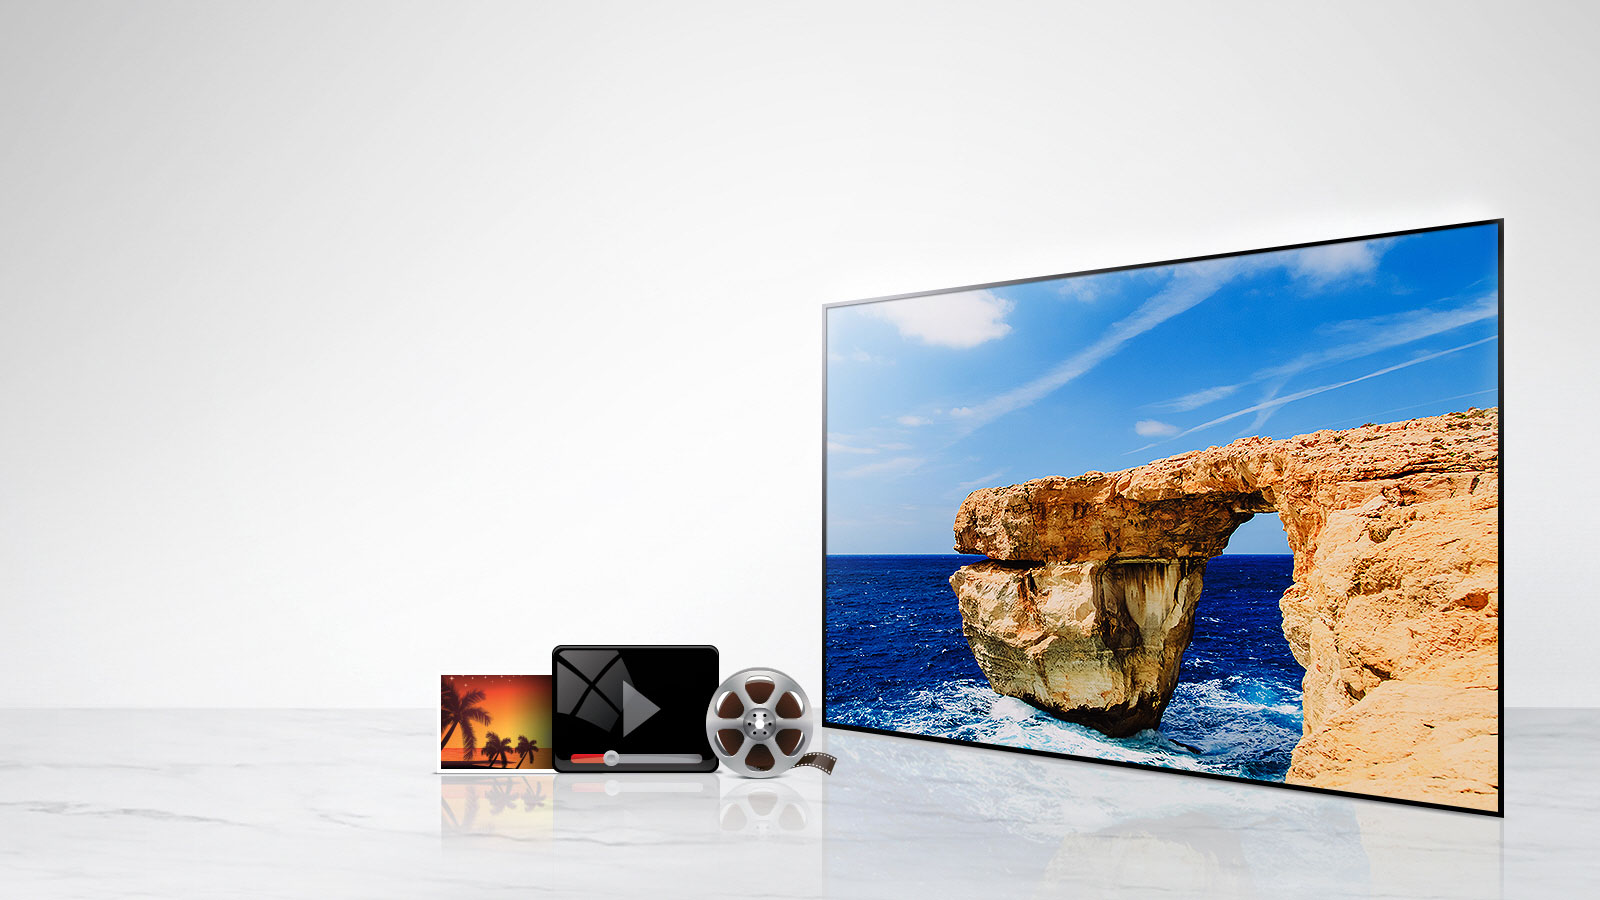 تلویزیون هوشمند ال جی LED TV Smart LG 55LJ62500GI سایز 55 اینچ